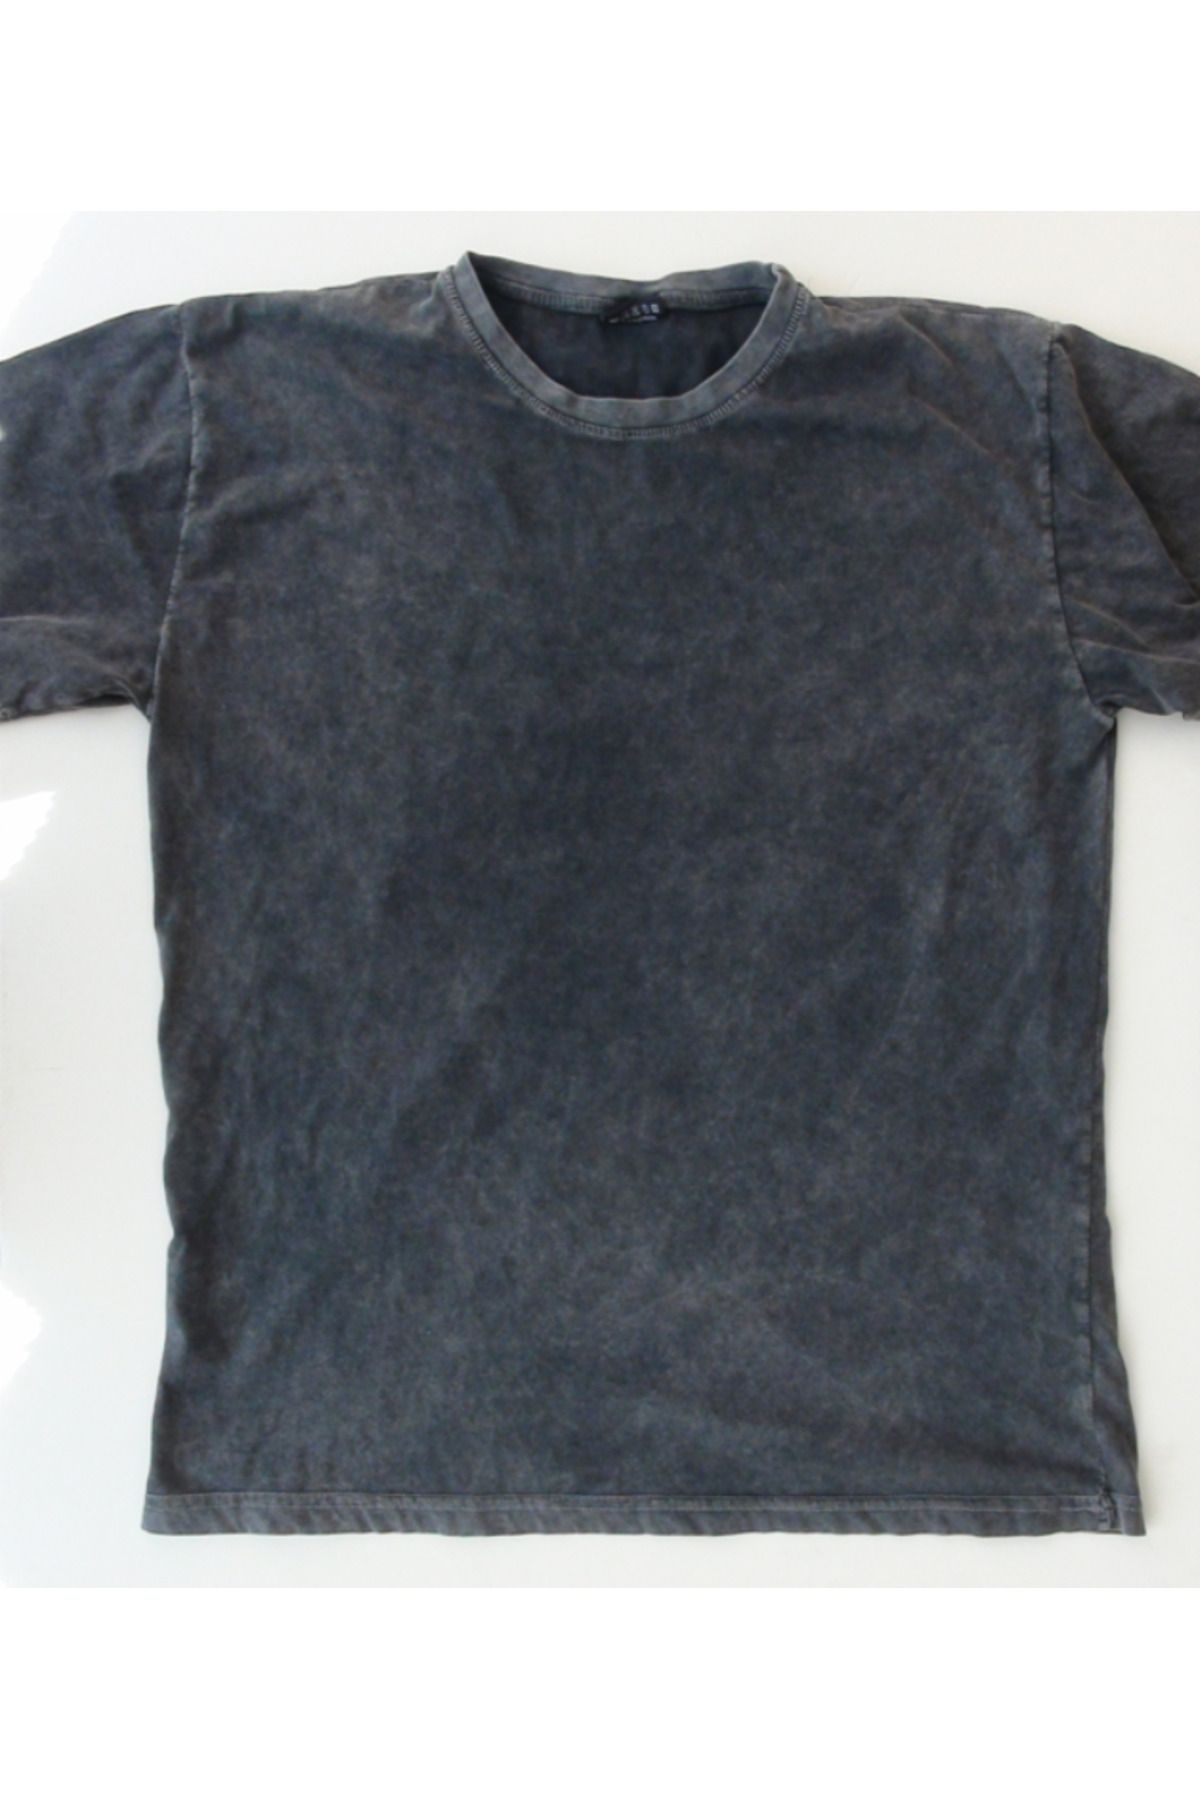 mAddog Baskısız T Shirt (basic Plain T Shirt) (relax Fit) / 9xl / 8xl / 7xl / 6xl / 5xl / 4xl / 3xl